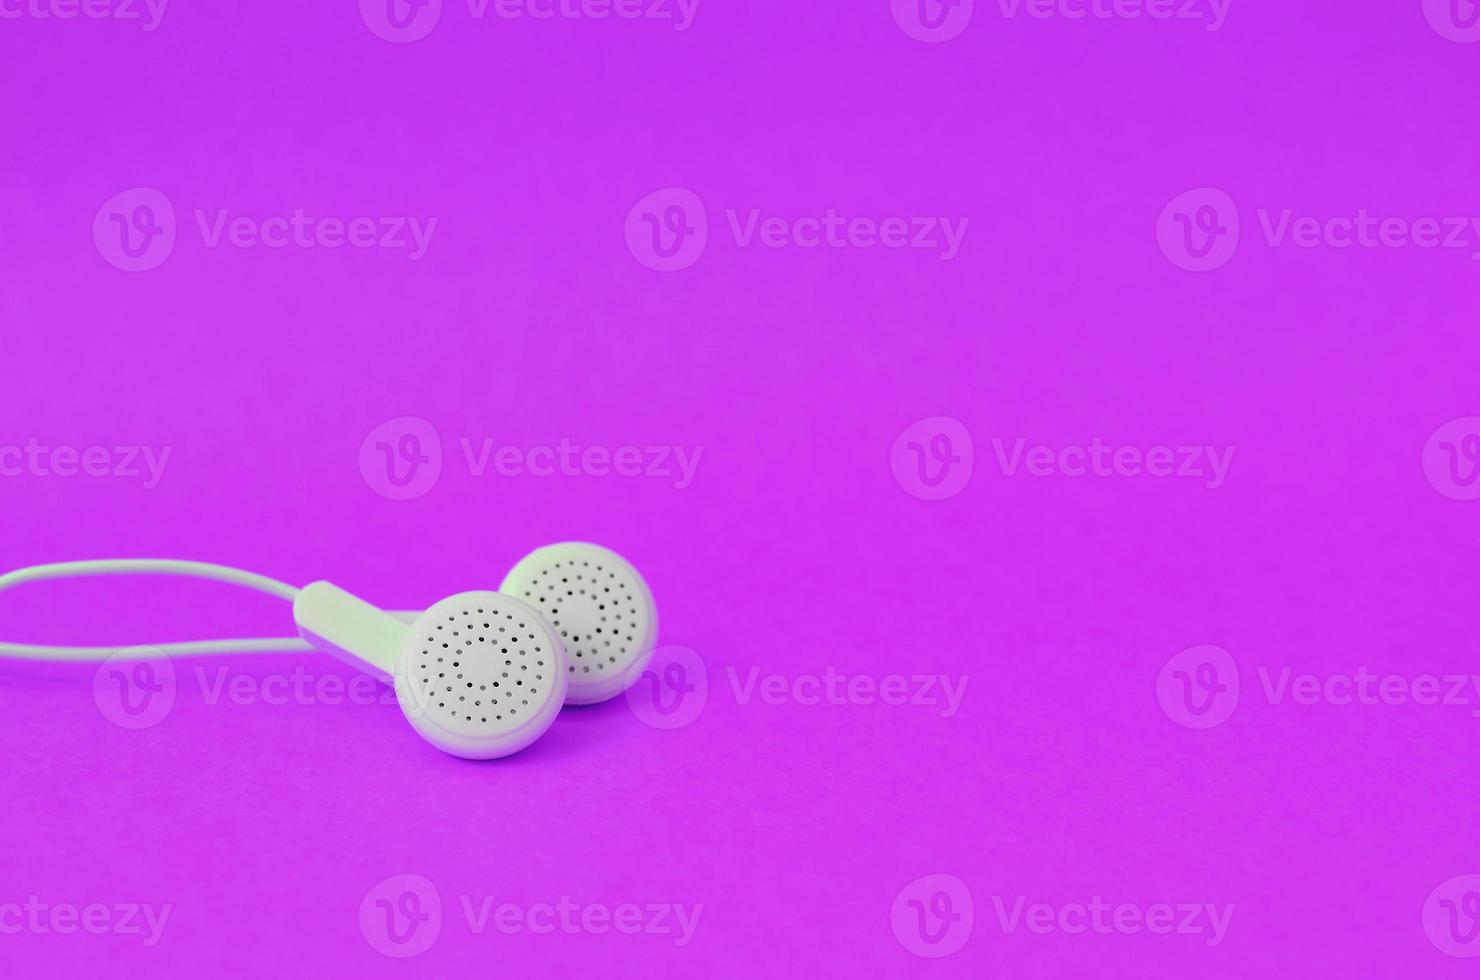 White modern earphones lies on a bright purple background. photo